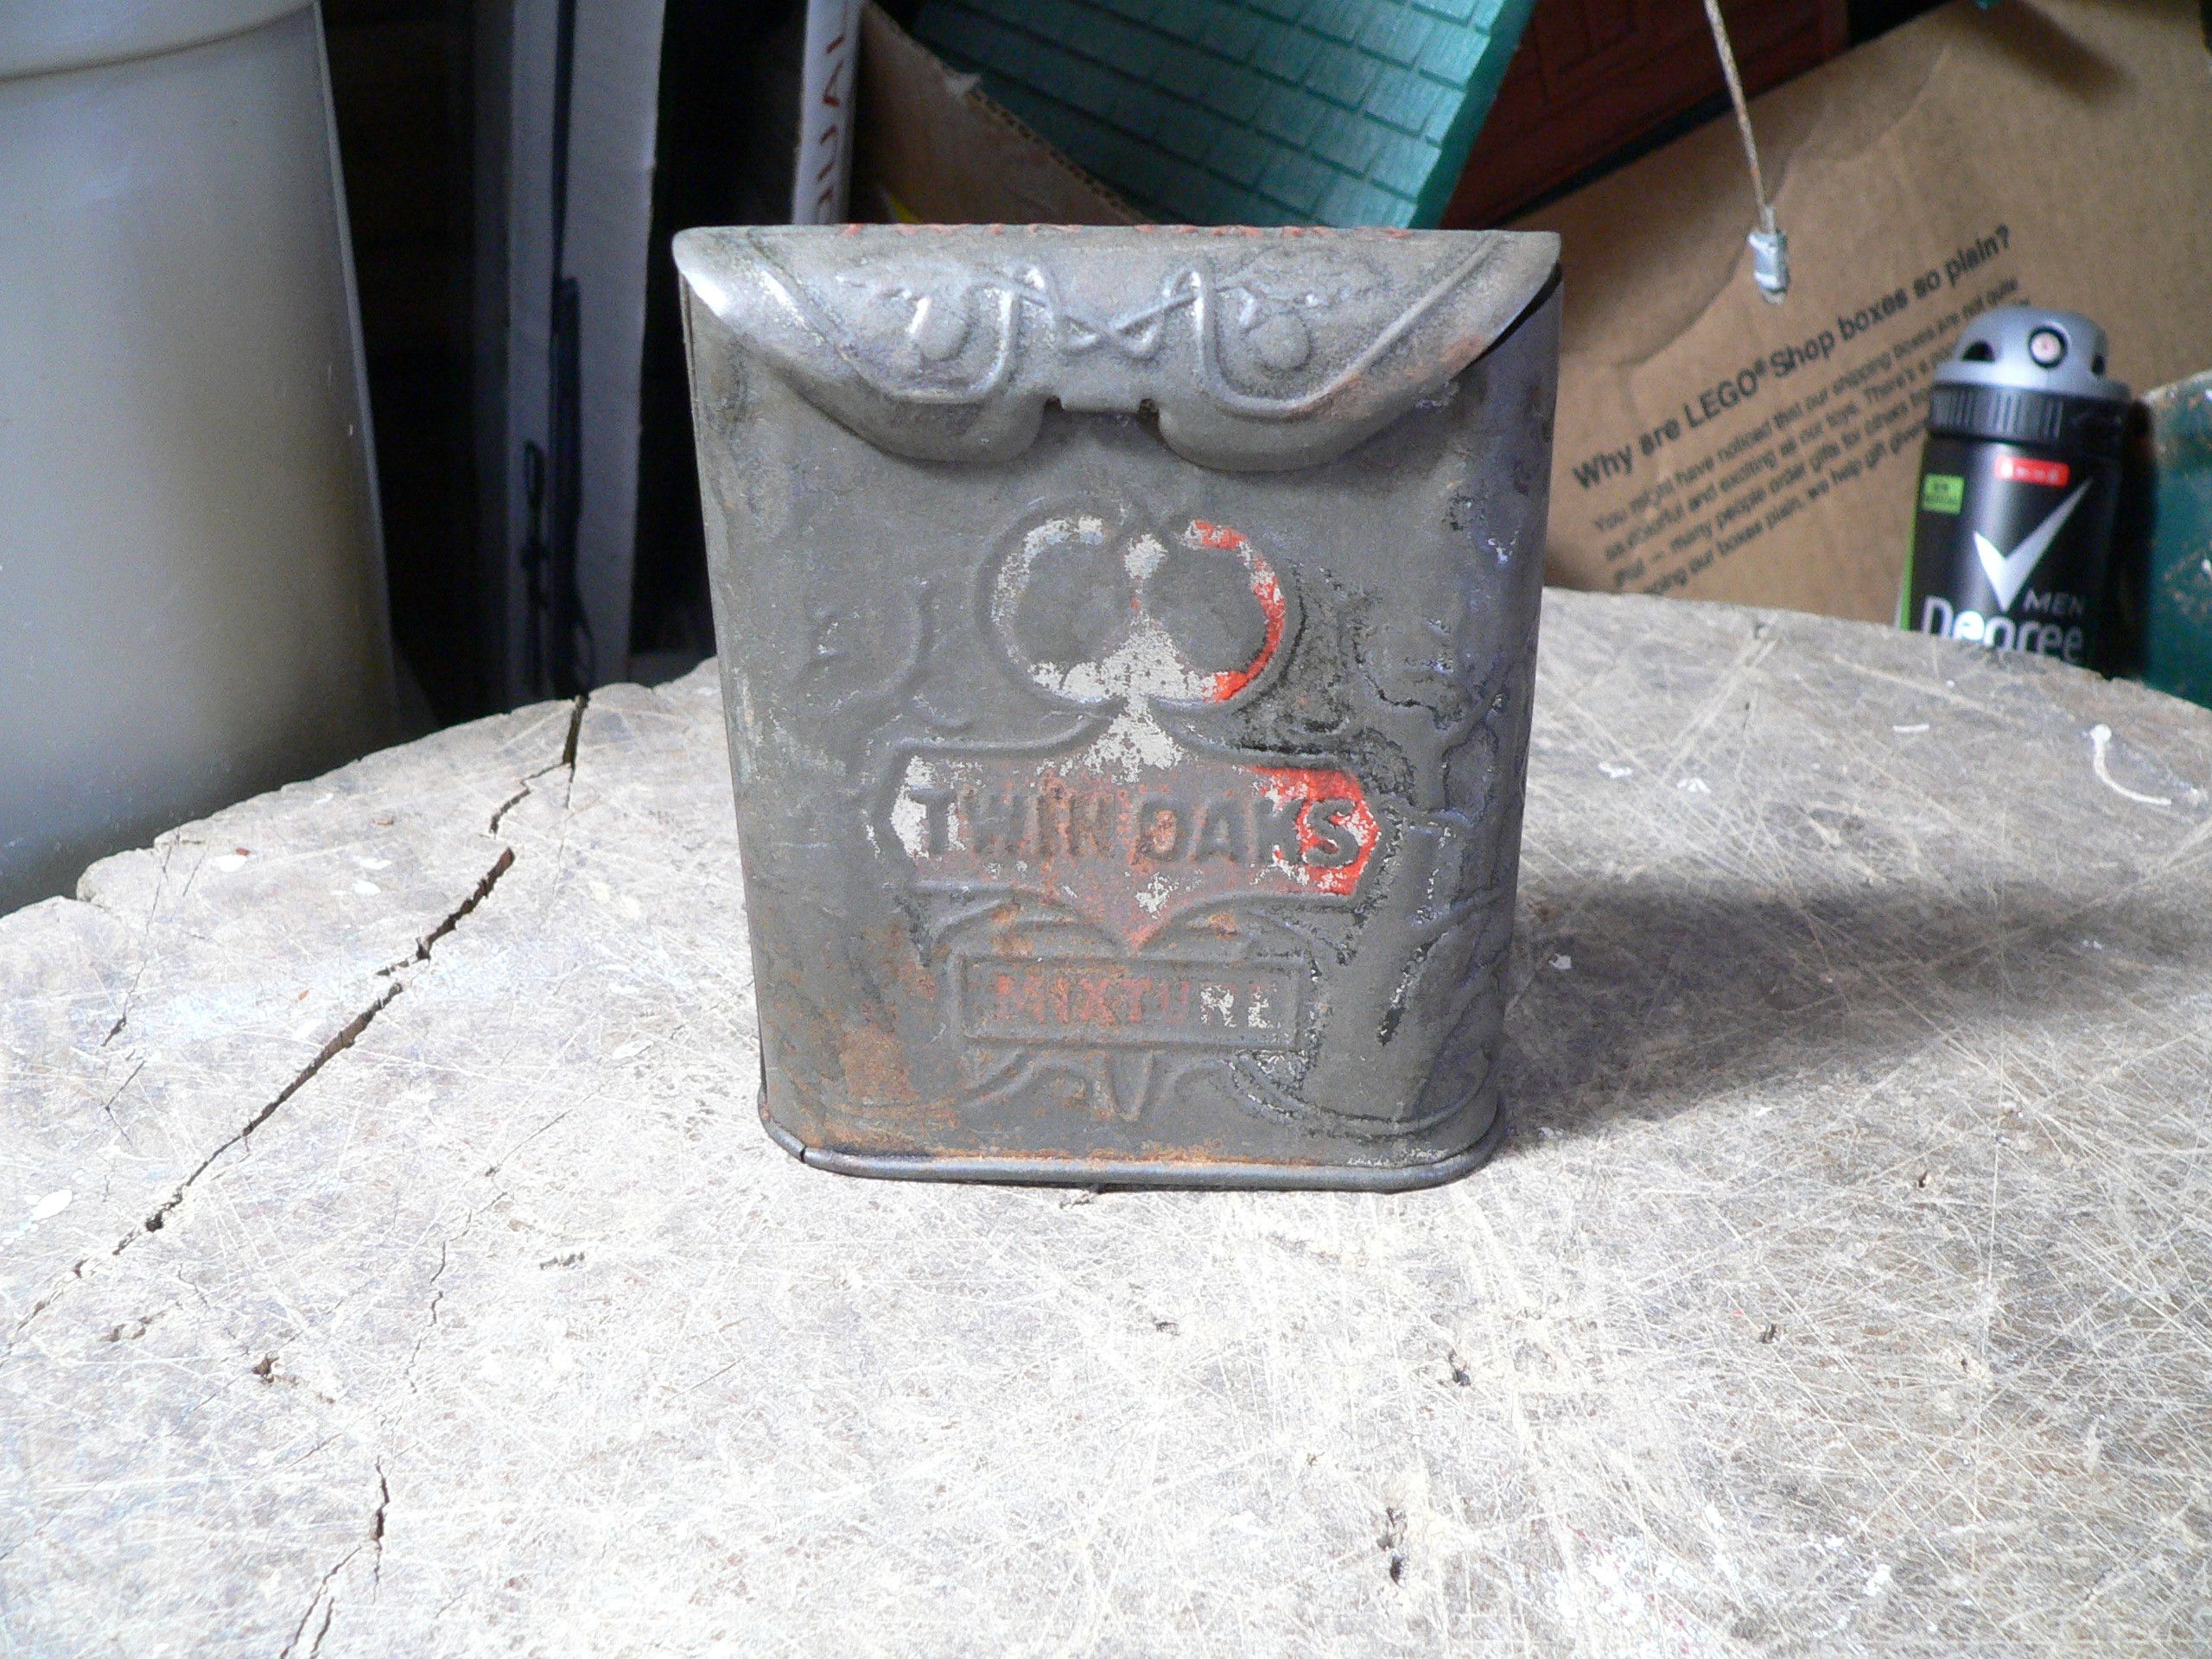 Twin oaks pocket tin antique # 9229